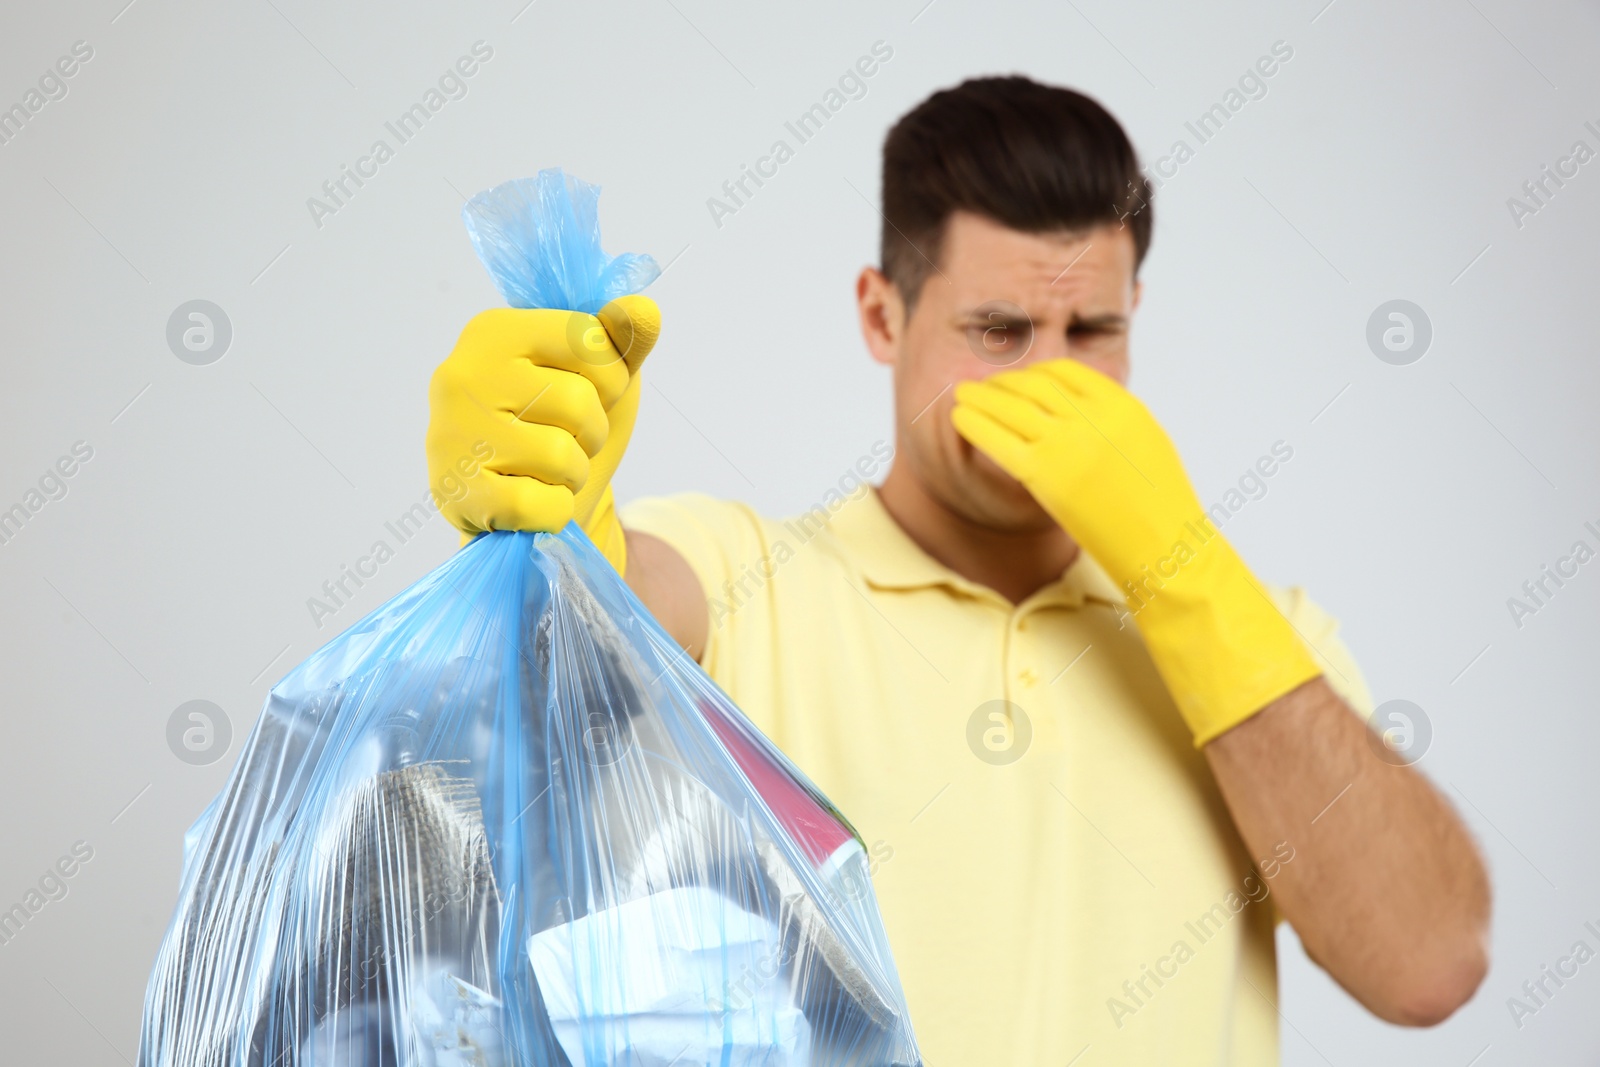 Photo of Man holding full garbage bag against light background, focus on hand